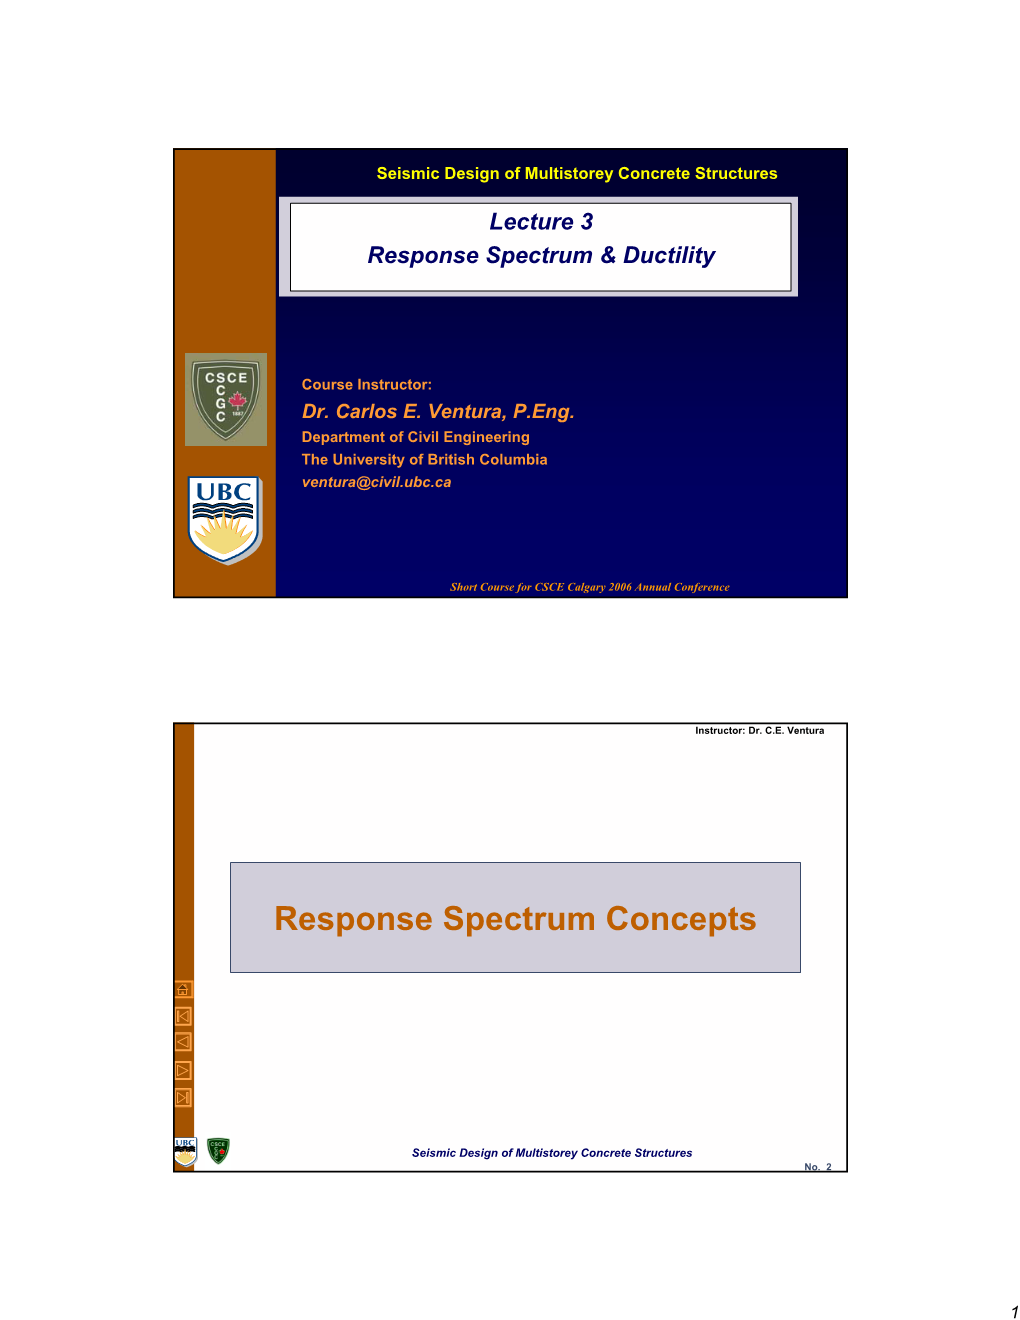 Response Spectrum Concepts